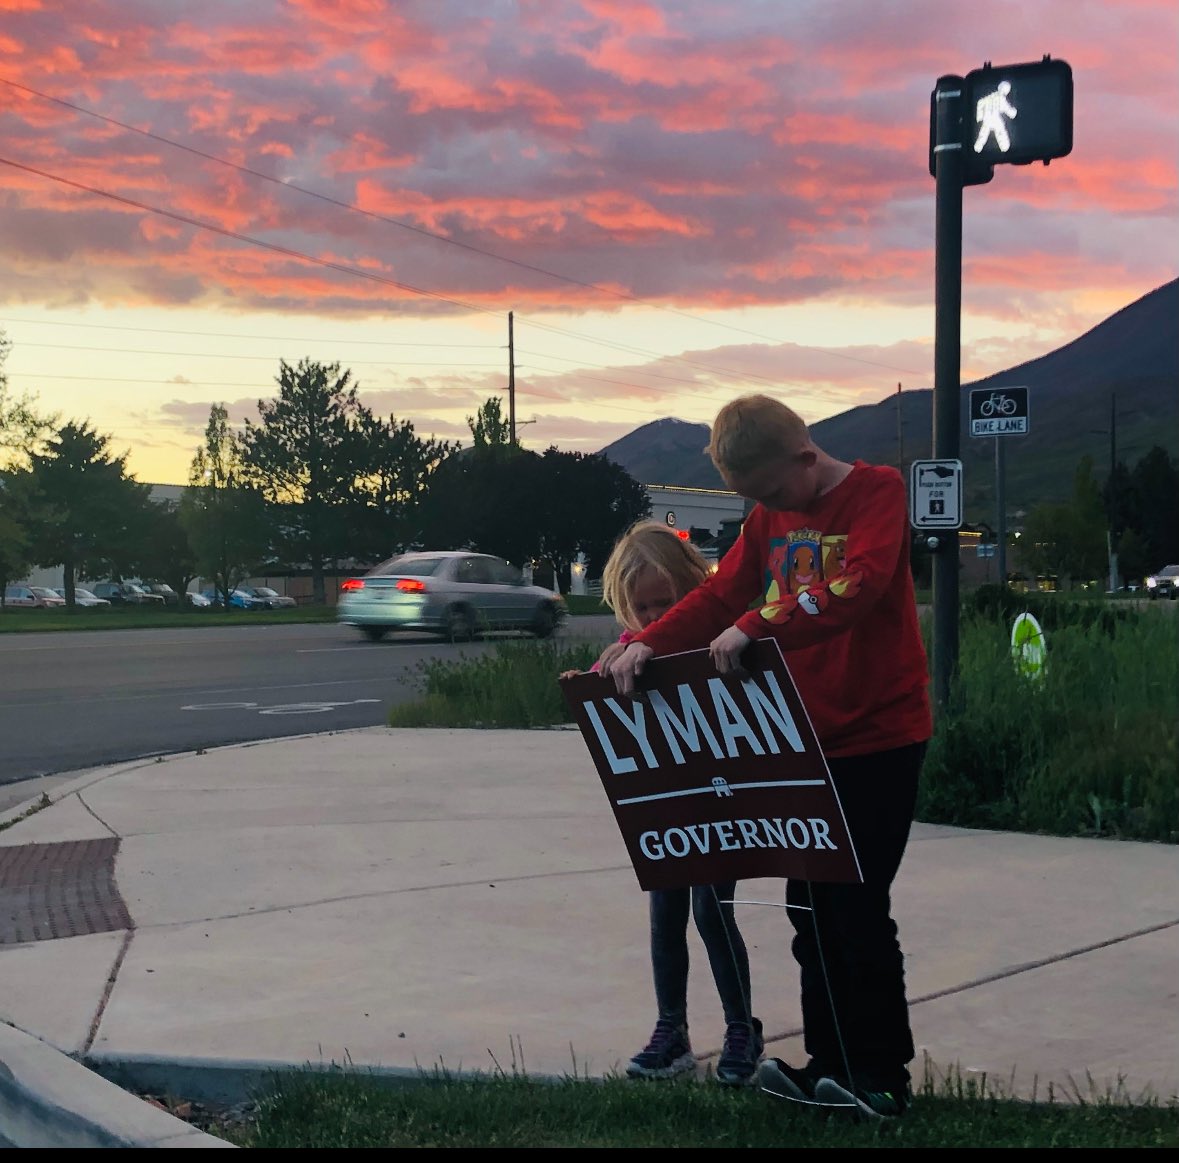 Utah’s rising generation is ready for better roads ahead. 
#utpol
#Lymanforgovernor